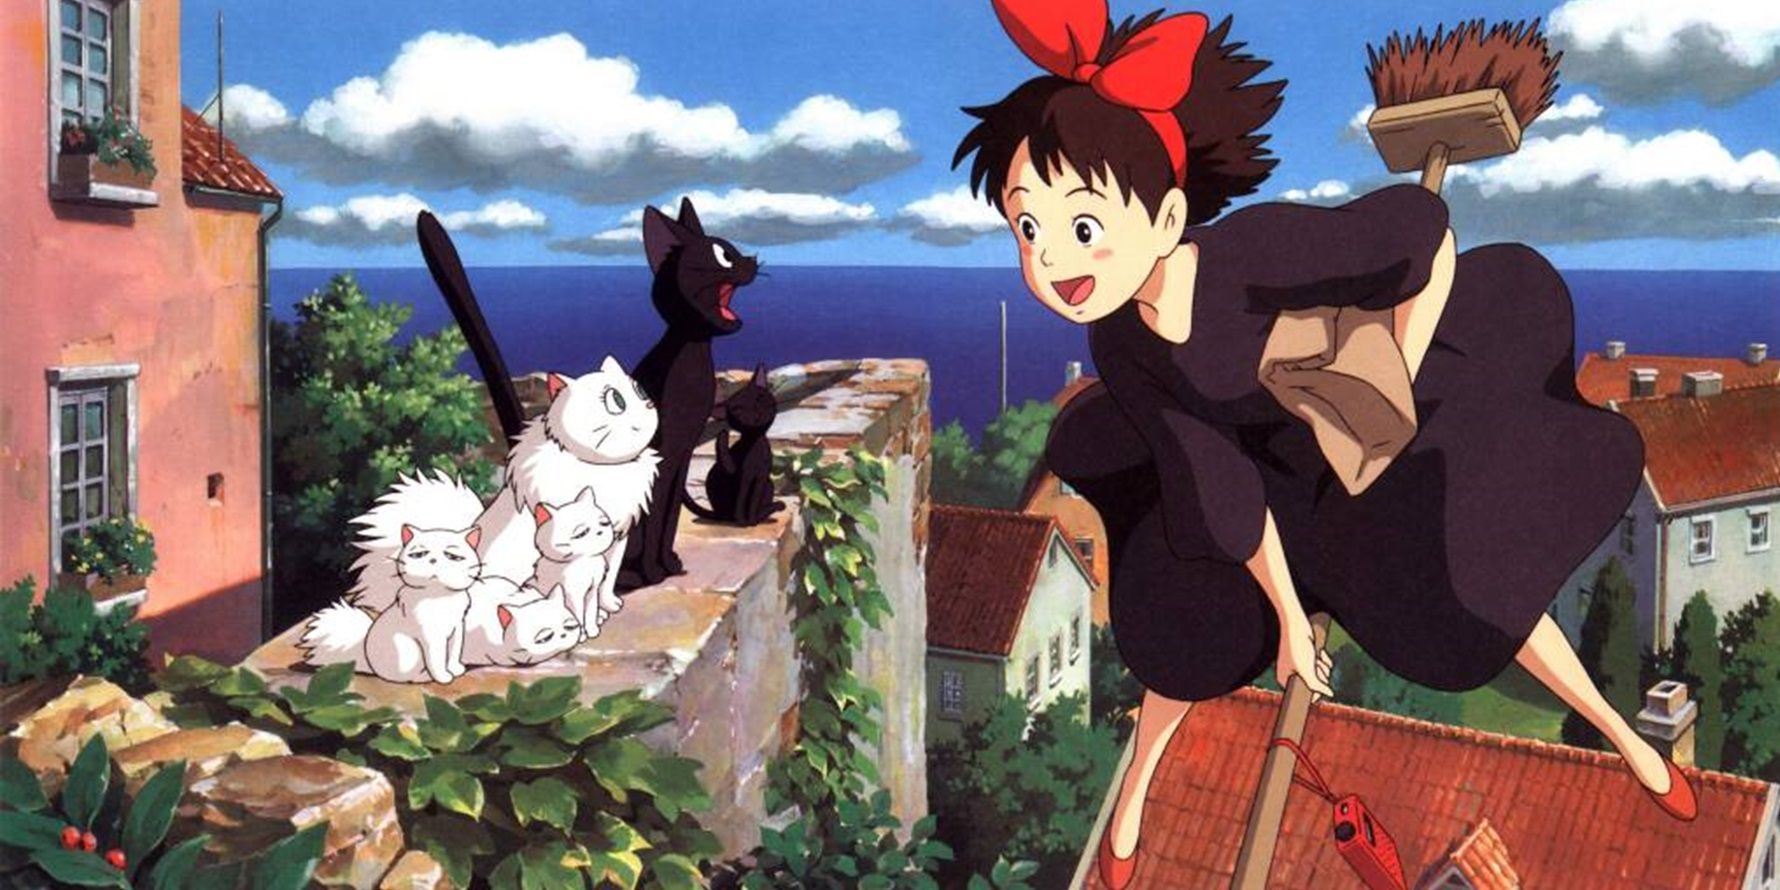 Mot bo phim cua Studio Ghibli da day nguoi